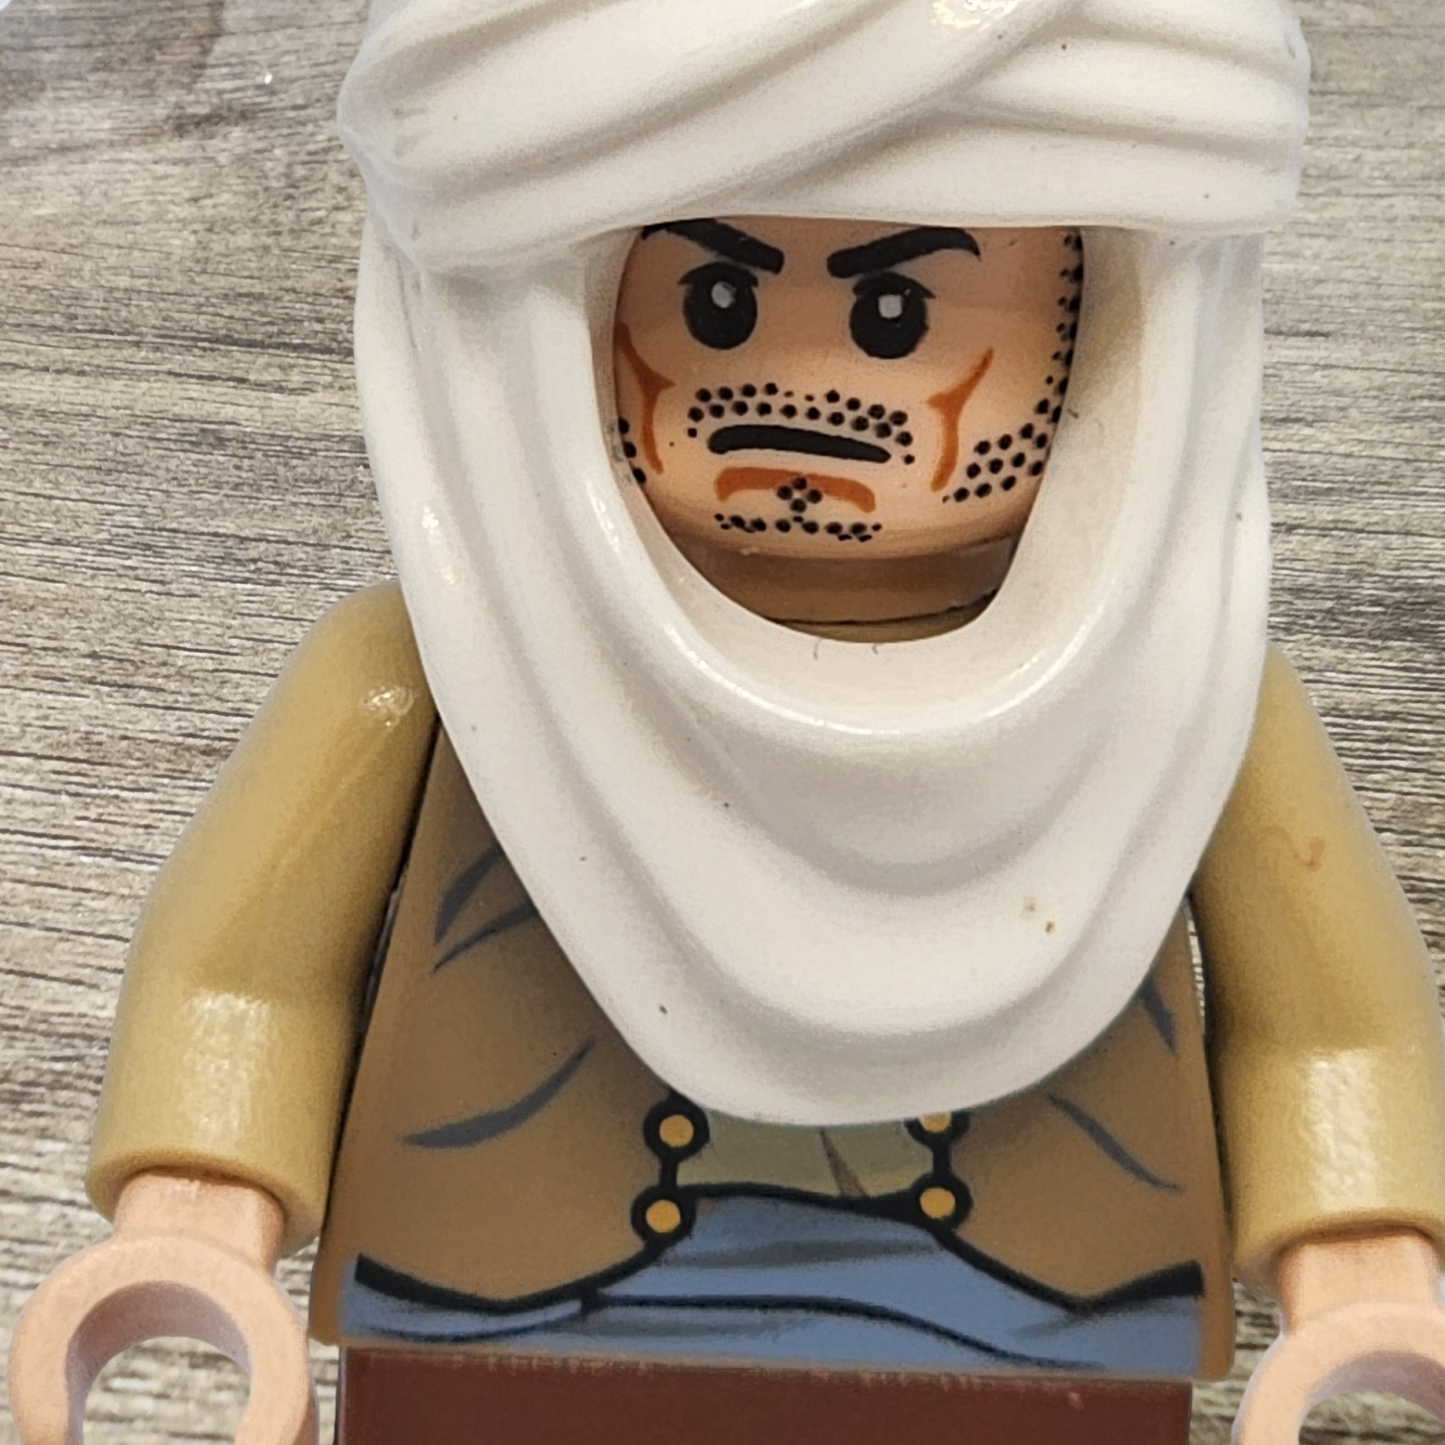 Lego Alamut Merchant minifigure Prince Of Persia pop001